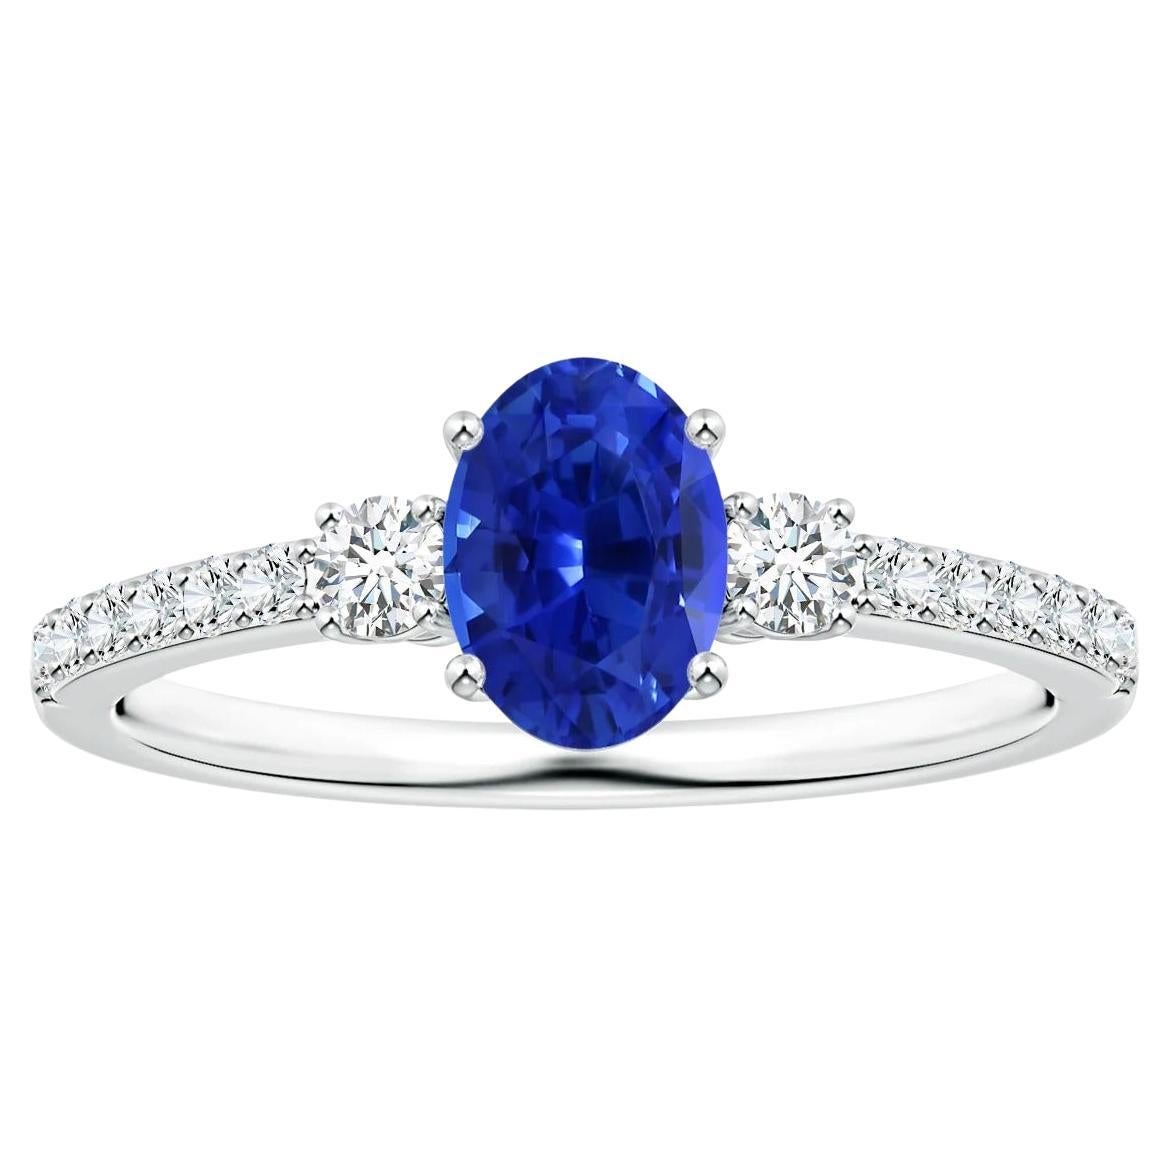 En vente :  Angara, bague en platine avec saphir bleu naturel à 3 pierres et diamants certifiés GIA